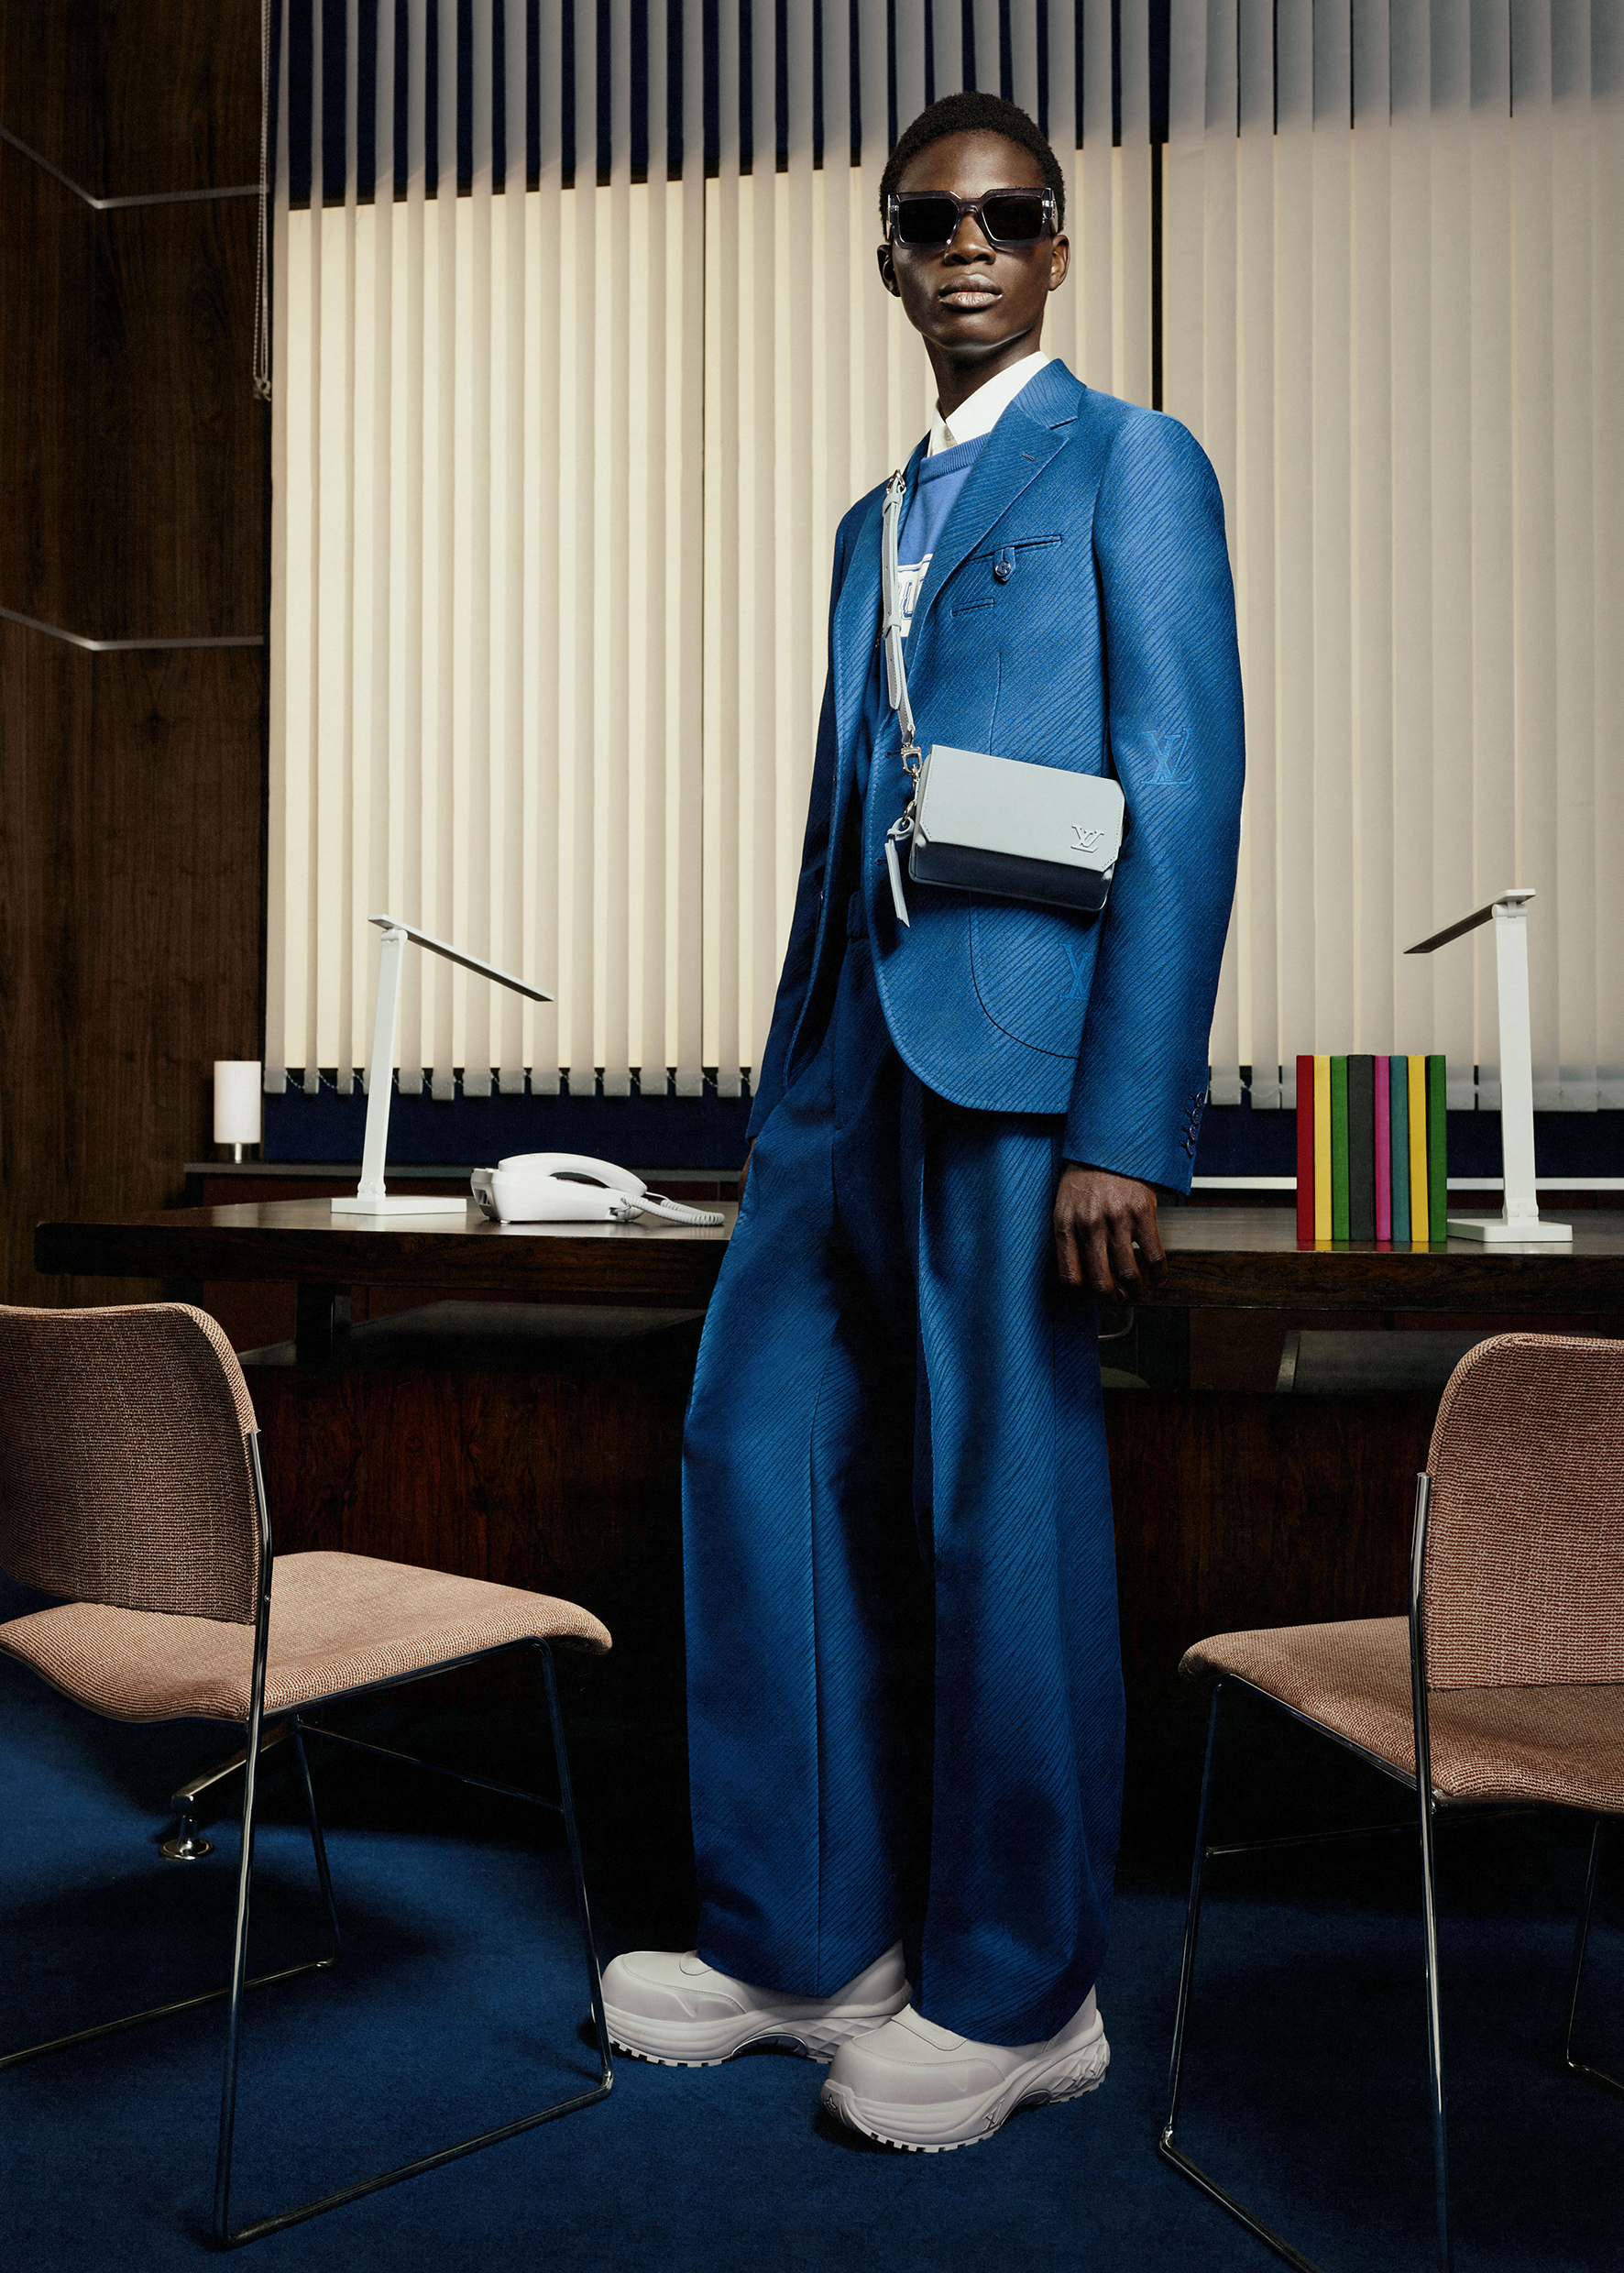 Louis Vuitton Men,s Fall/Winter 2017/18 Advertising Campaign 